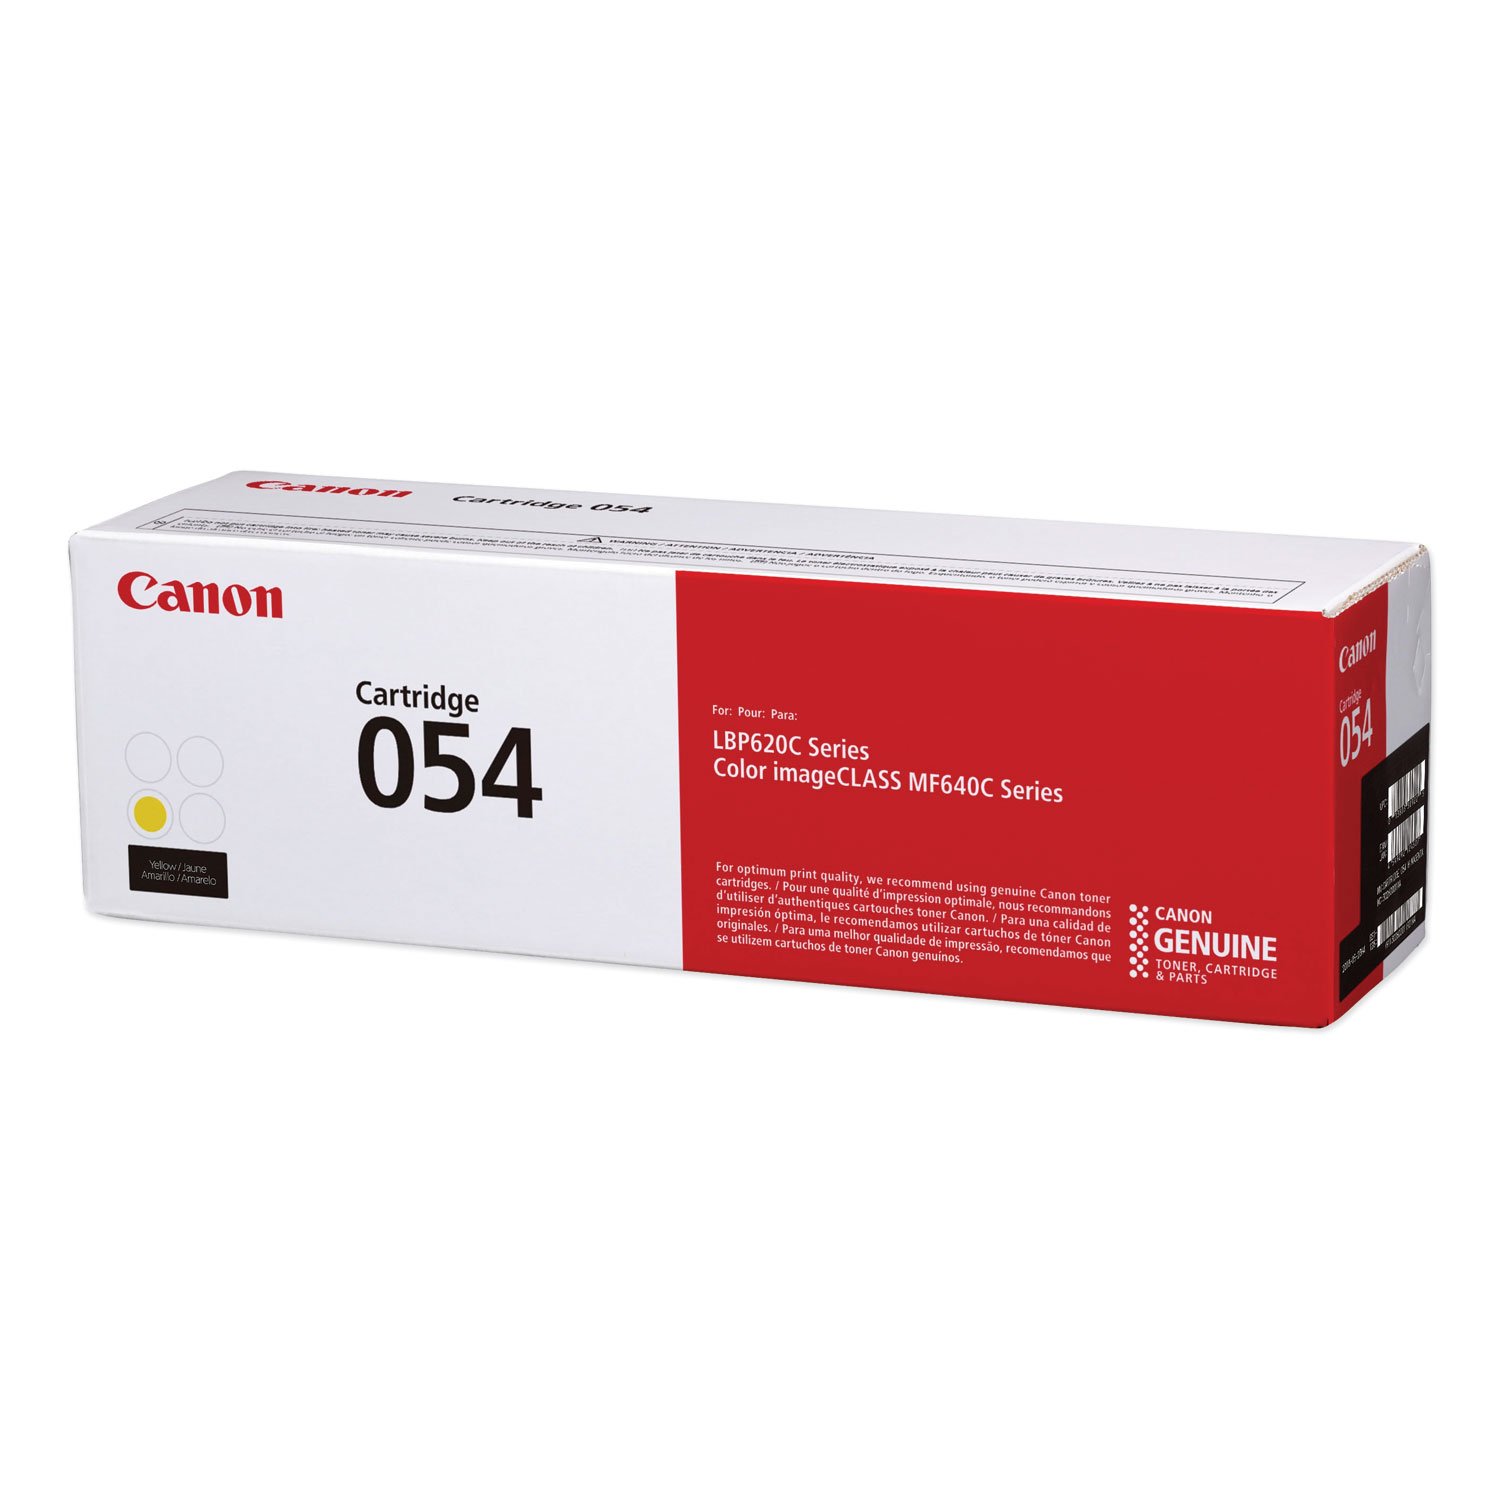  Canon 3021C001 3023C001 (054) Toner, 1,200 Page-Yield, Yellow (CNM3021C001) 